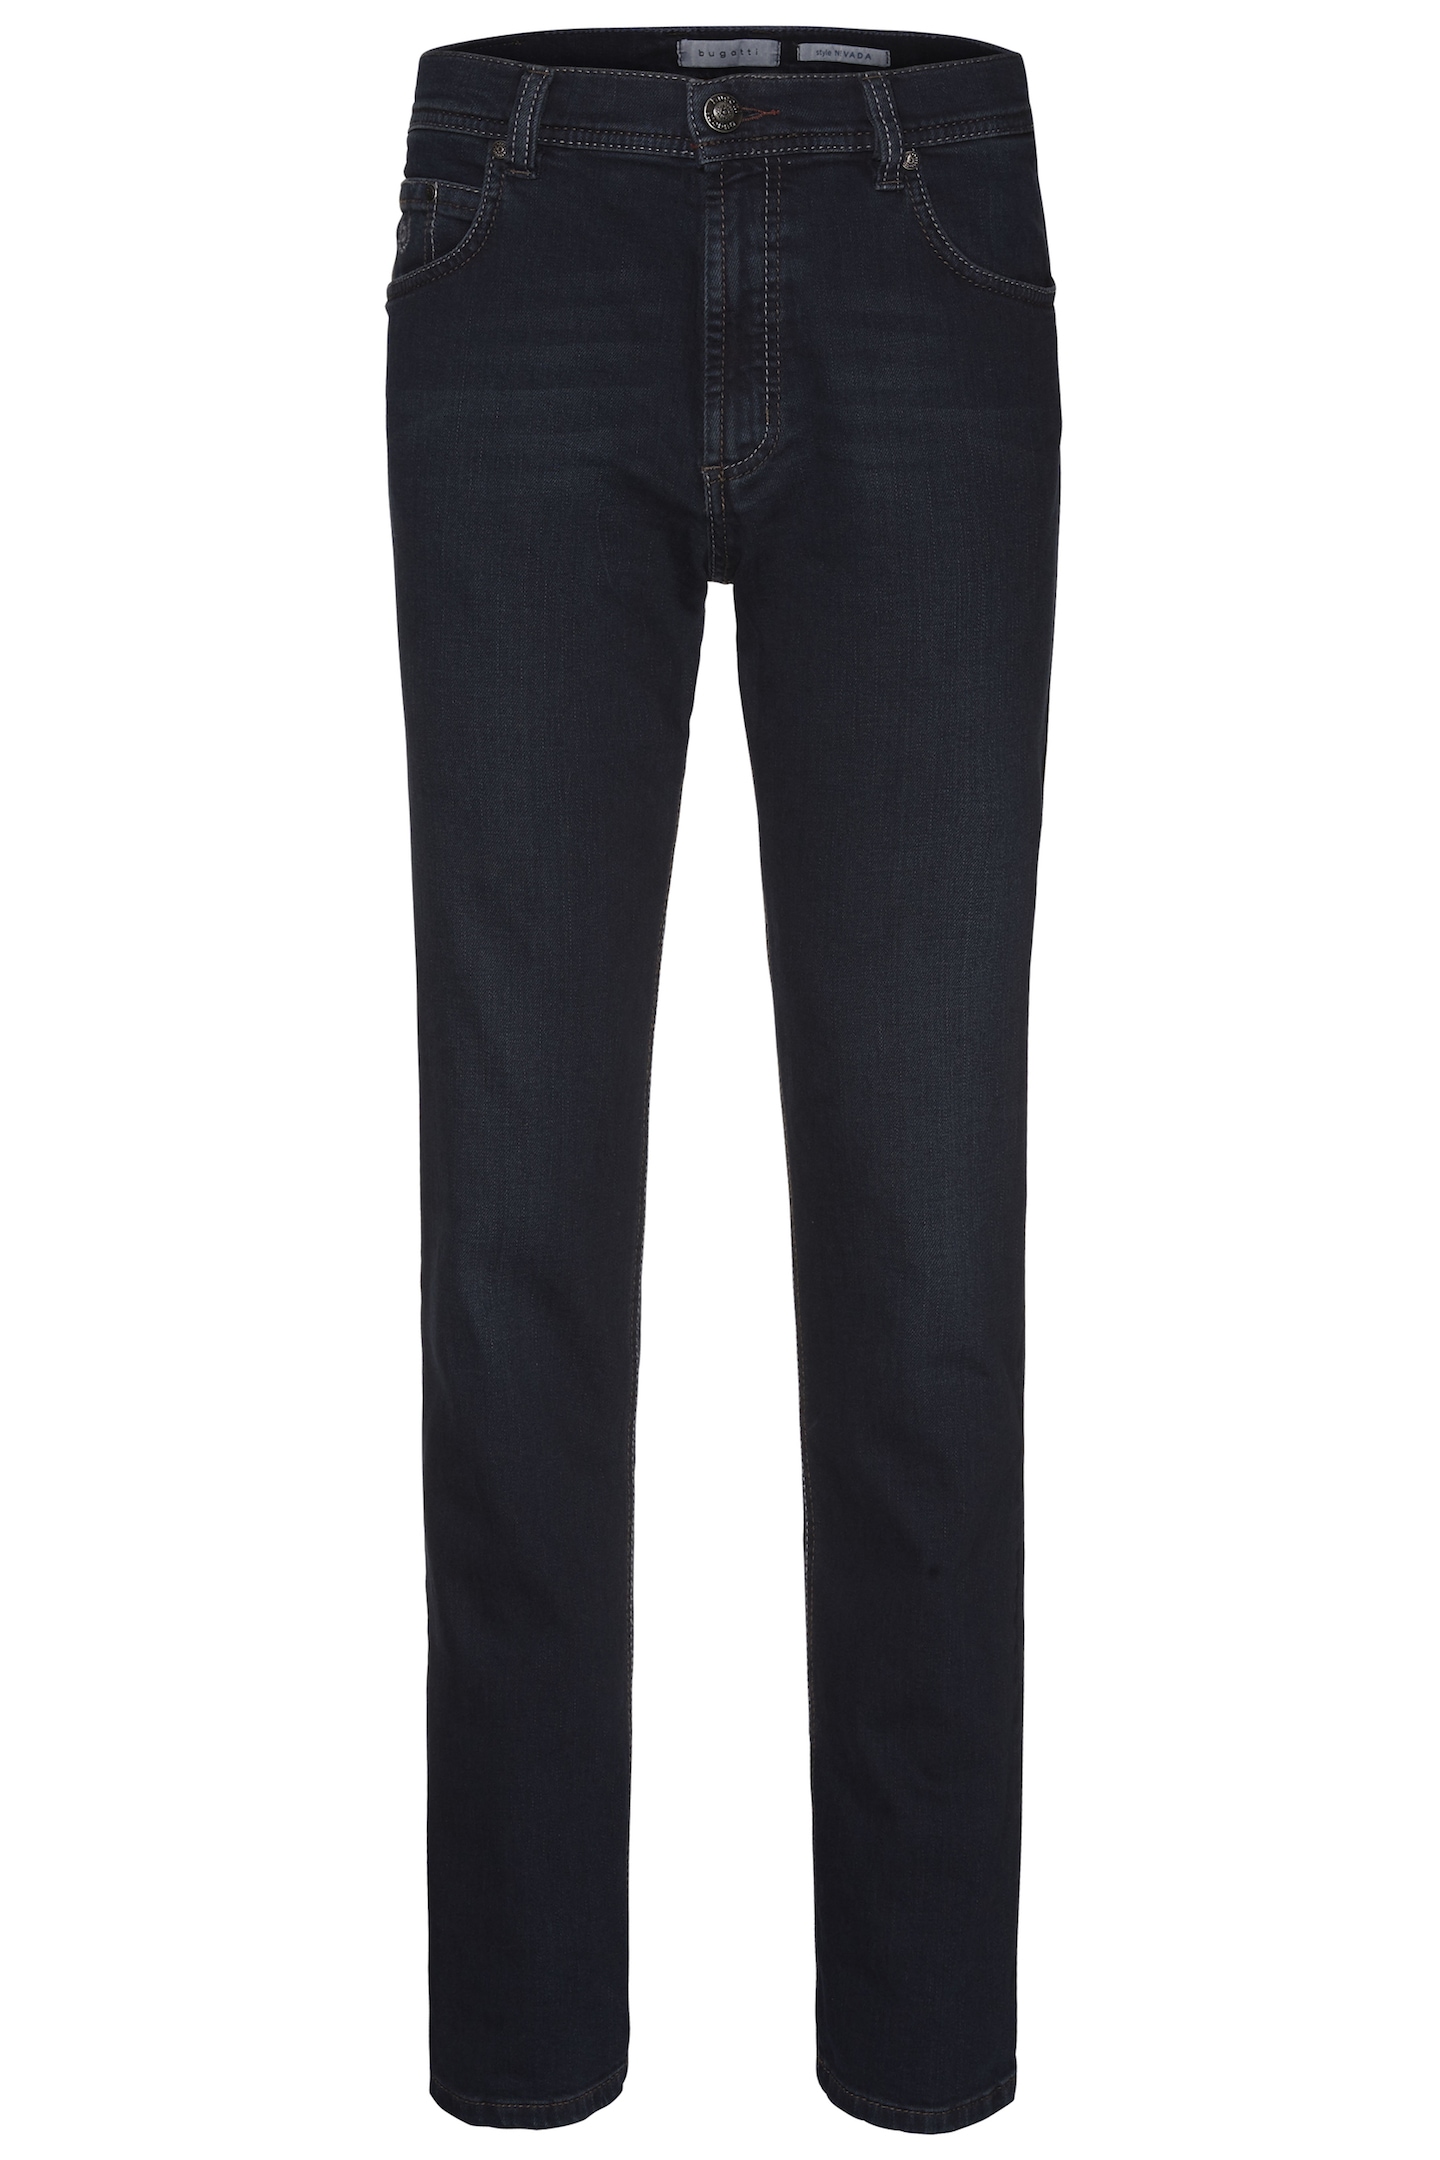 bugatti 5-Pocket-Jeans, mit Comfort Stretch